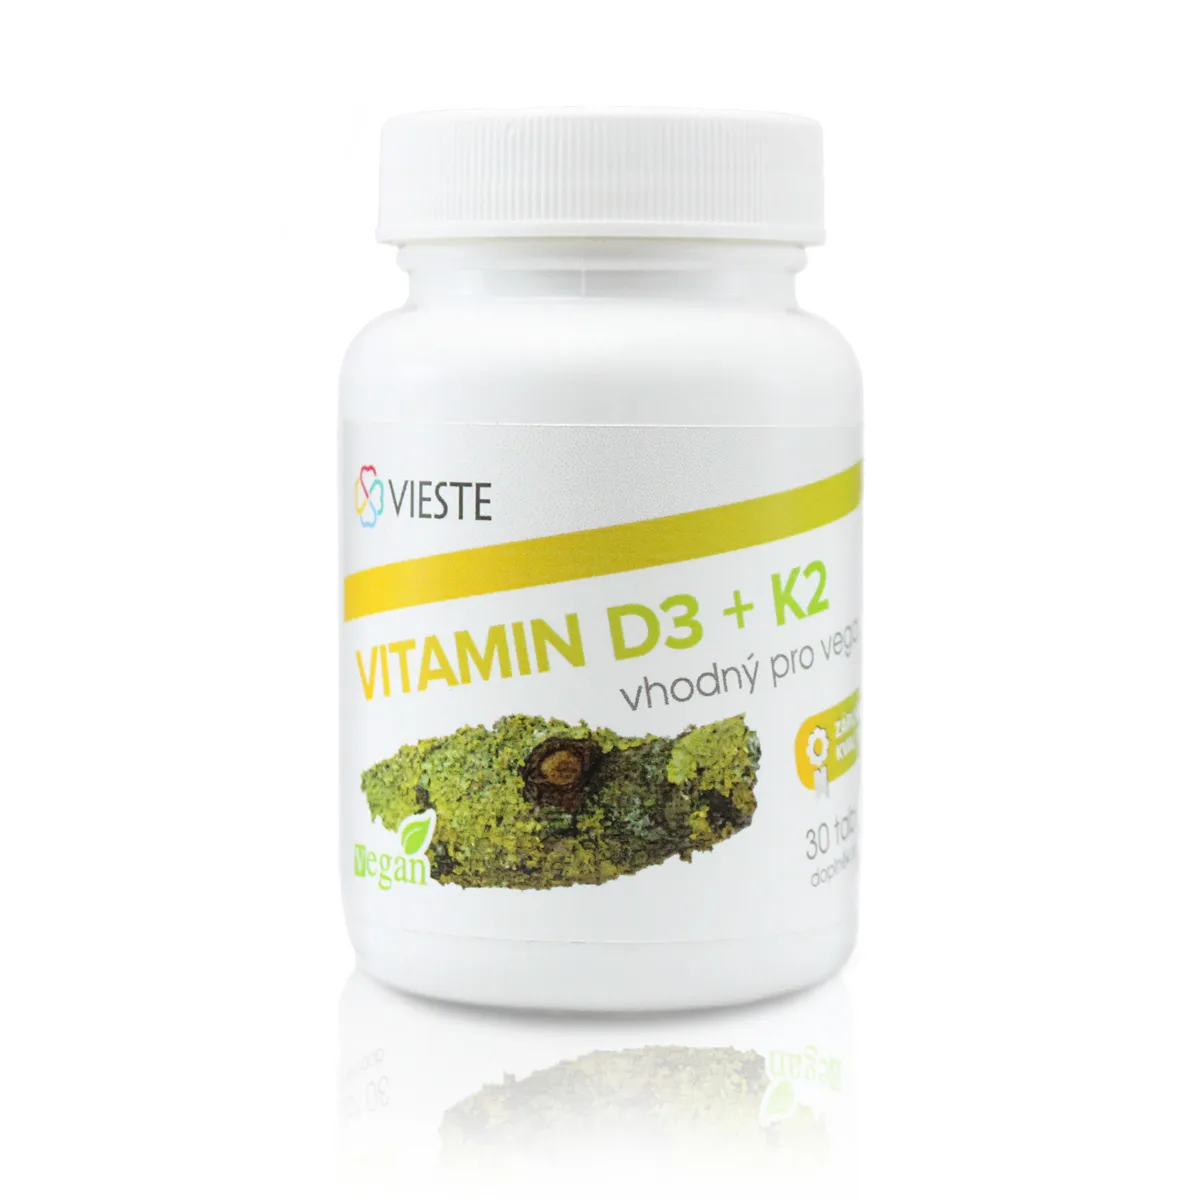 Vieste Vitamin D3 + K2